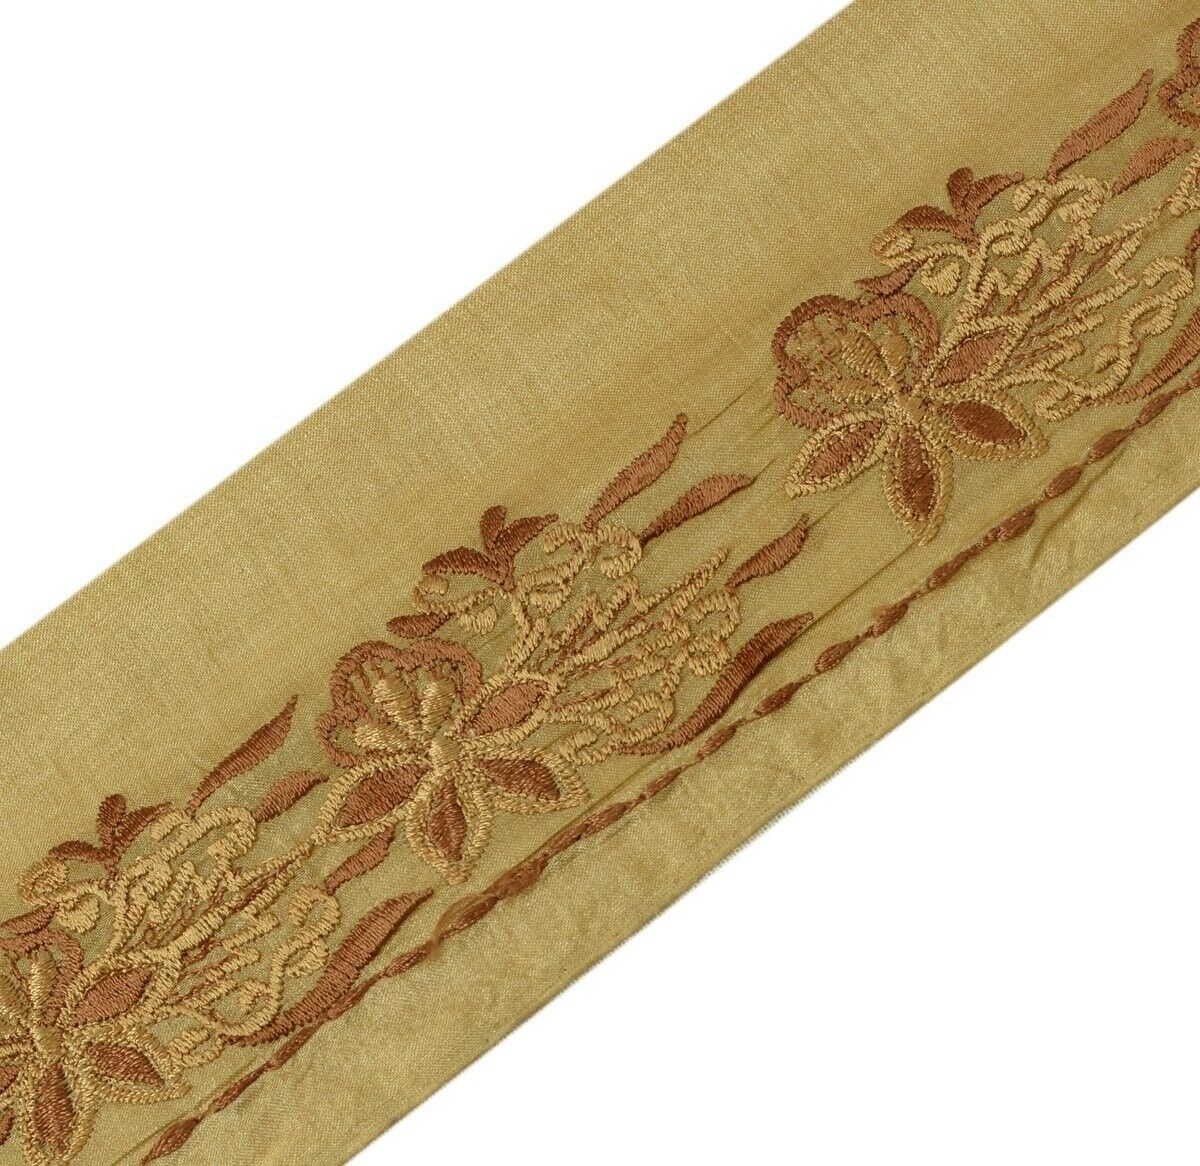 Vintage Sari Border Indian Craft Trim Antique Embroidered Ribbon Lace Brown